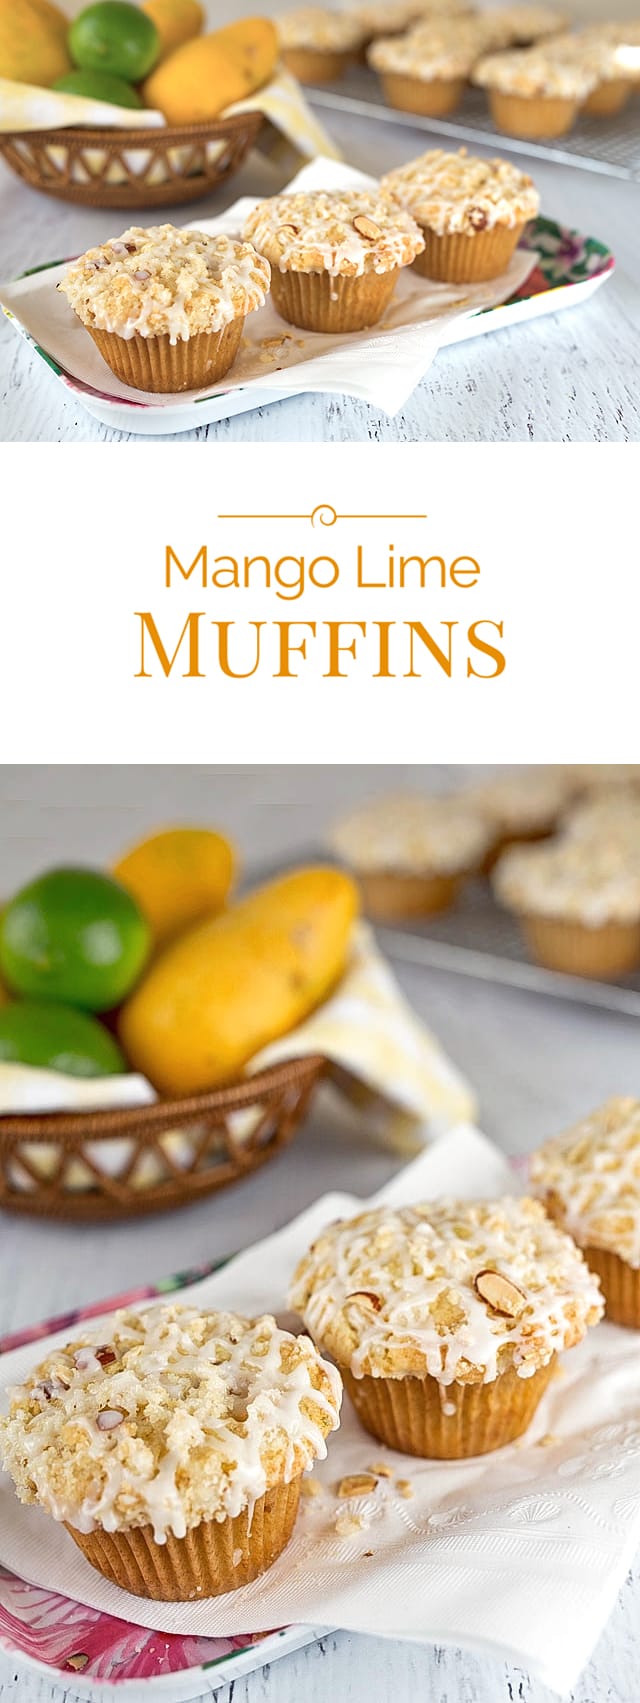 Mango-Lime-Muffins-Collage-2-Barbara-Bakes